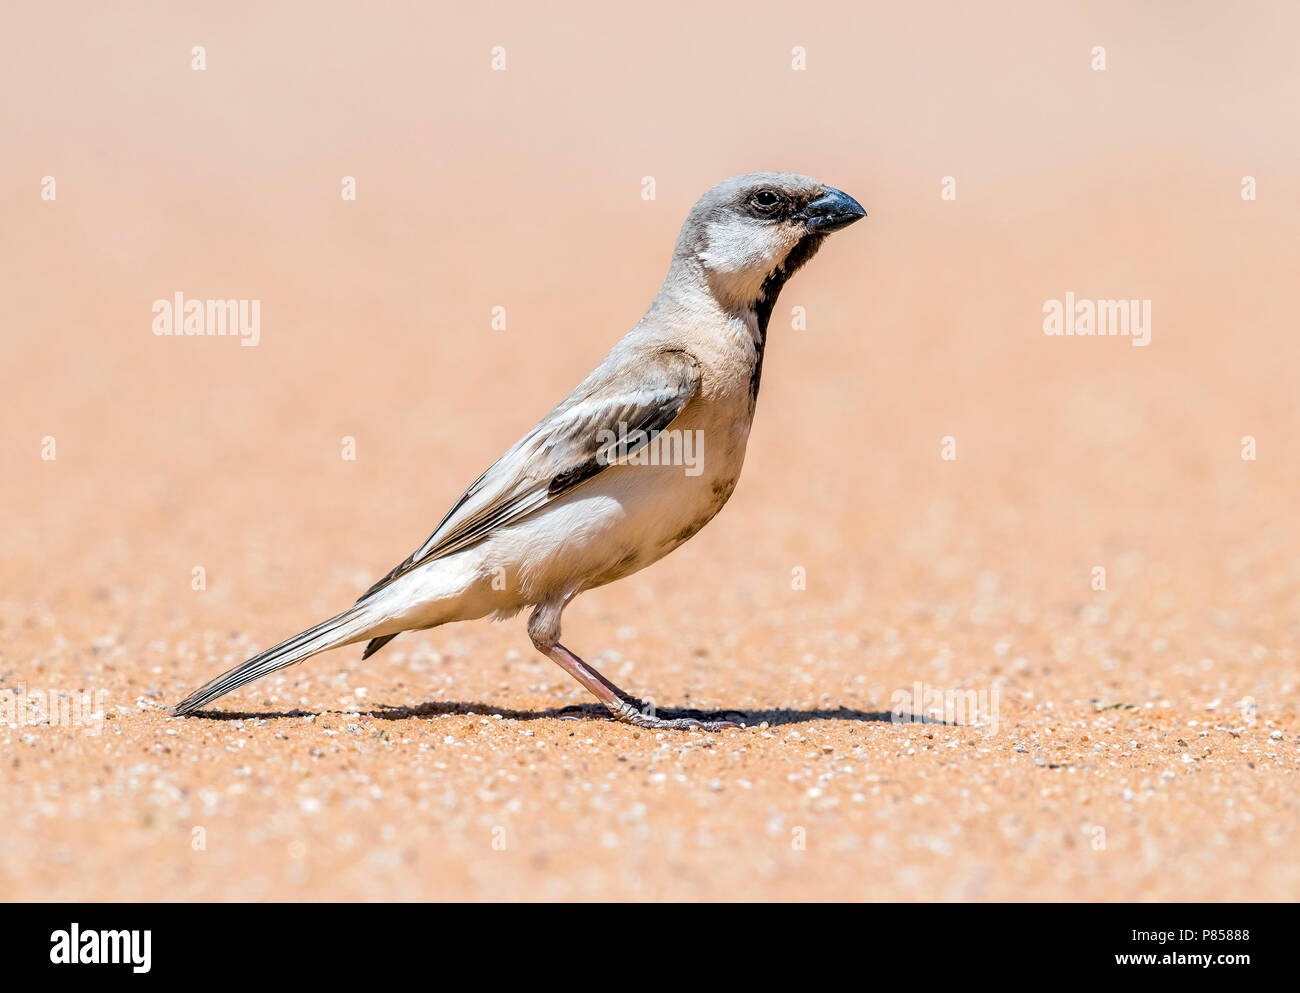 Male Northern Desert Sparrow sitting on the sand, Inchiri, Mauritania. April 04, 2018. Stock Photo